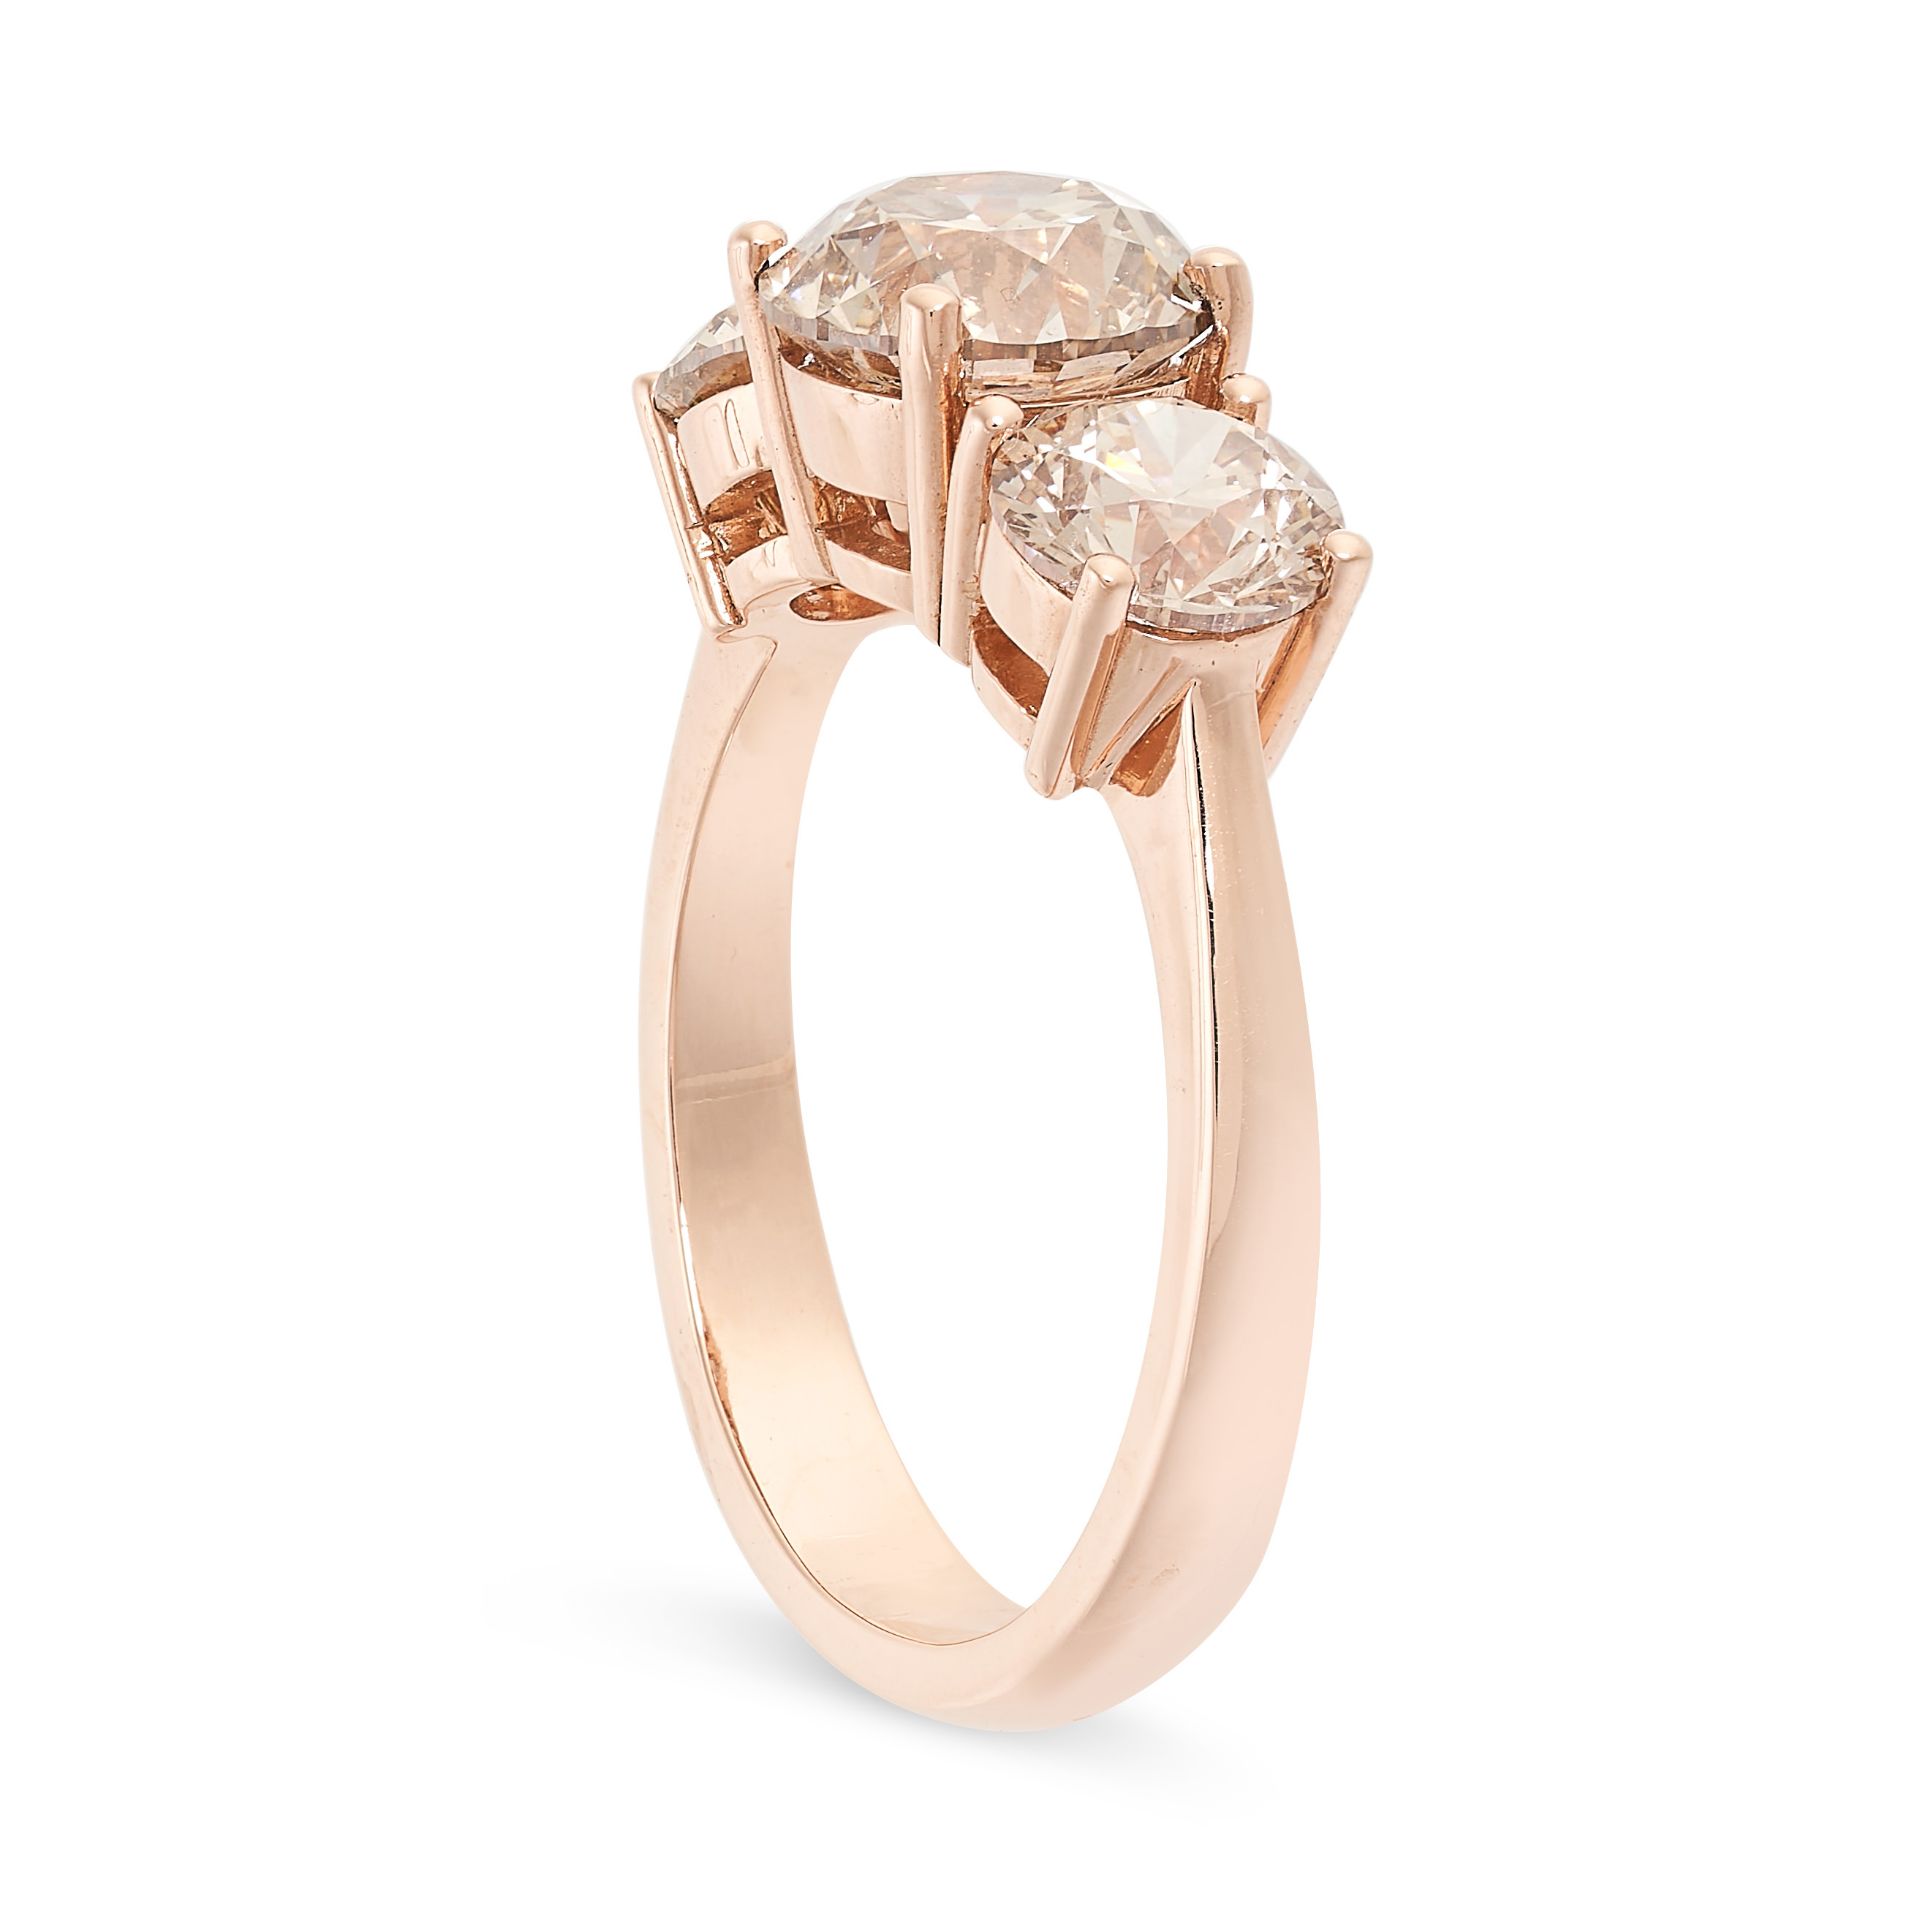 A DIAMOND THREE STONE RING in 18ct rose gold, set with three round brilliant cut diamonds all - Bild 2 aus 2